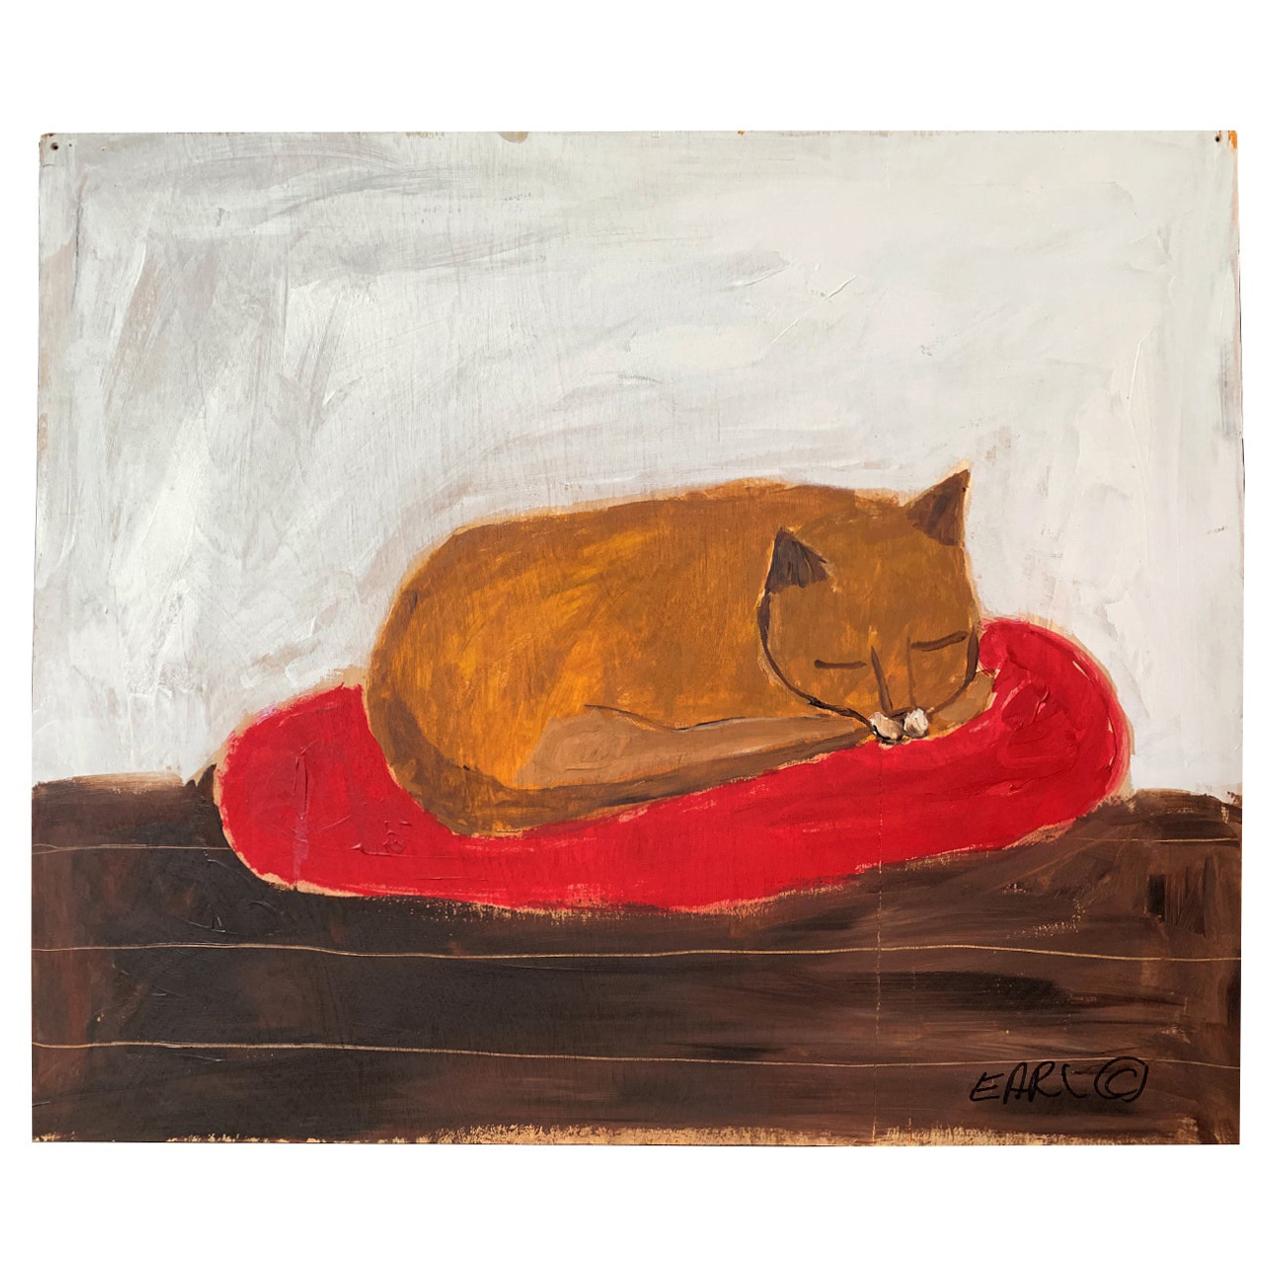 Painting of Sleeping Cat by Earl Swanigan